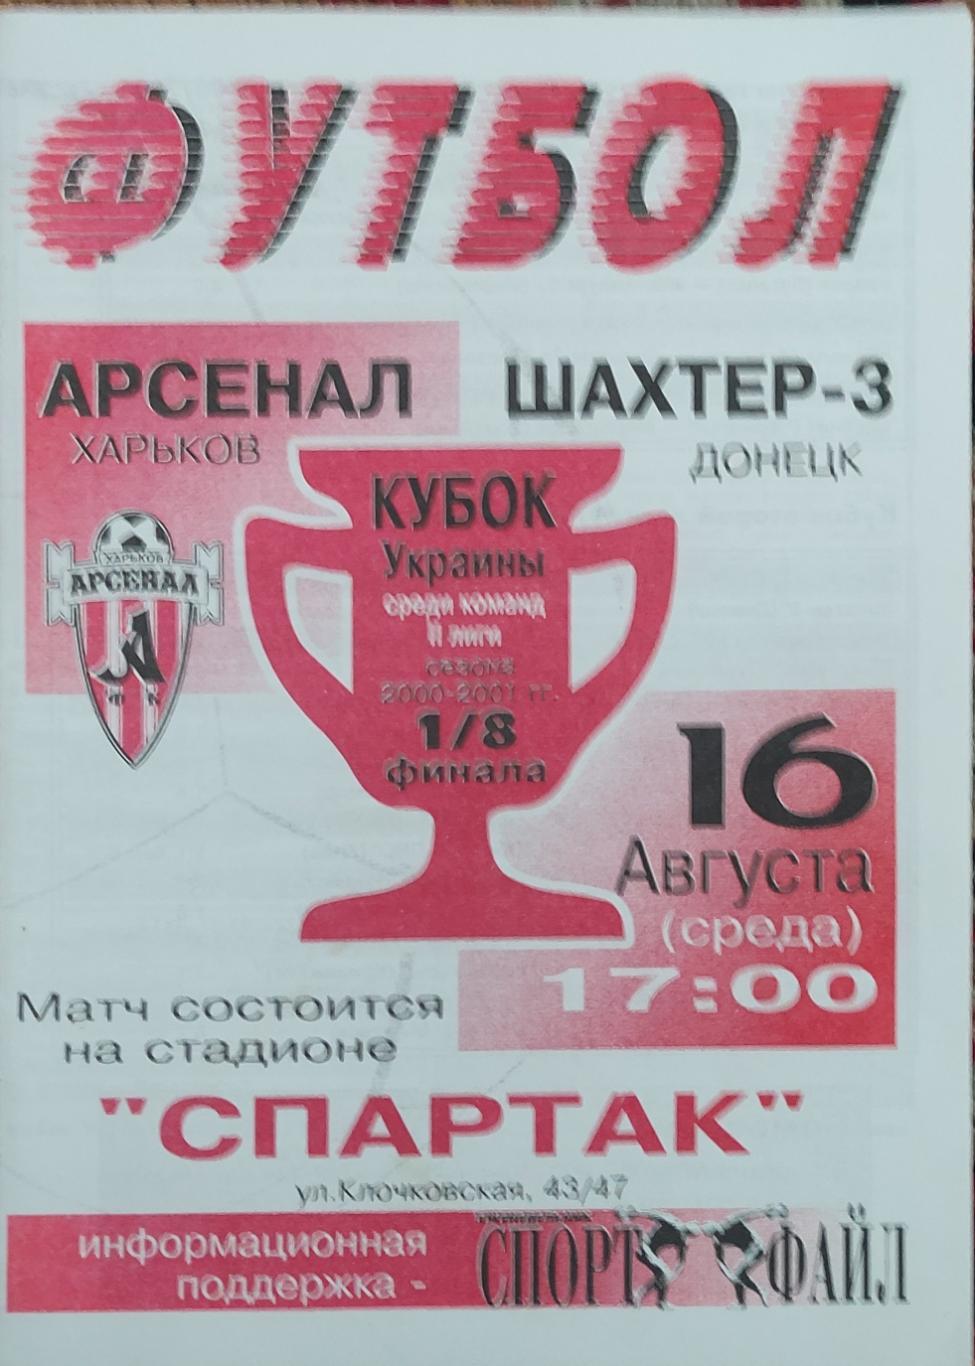 Арсенал Харьков -Шахтер-3 Донецк .16.08.2000 кубок